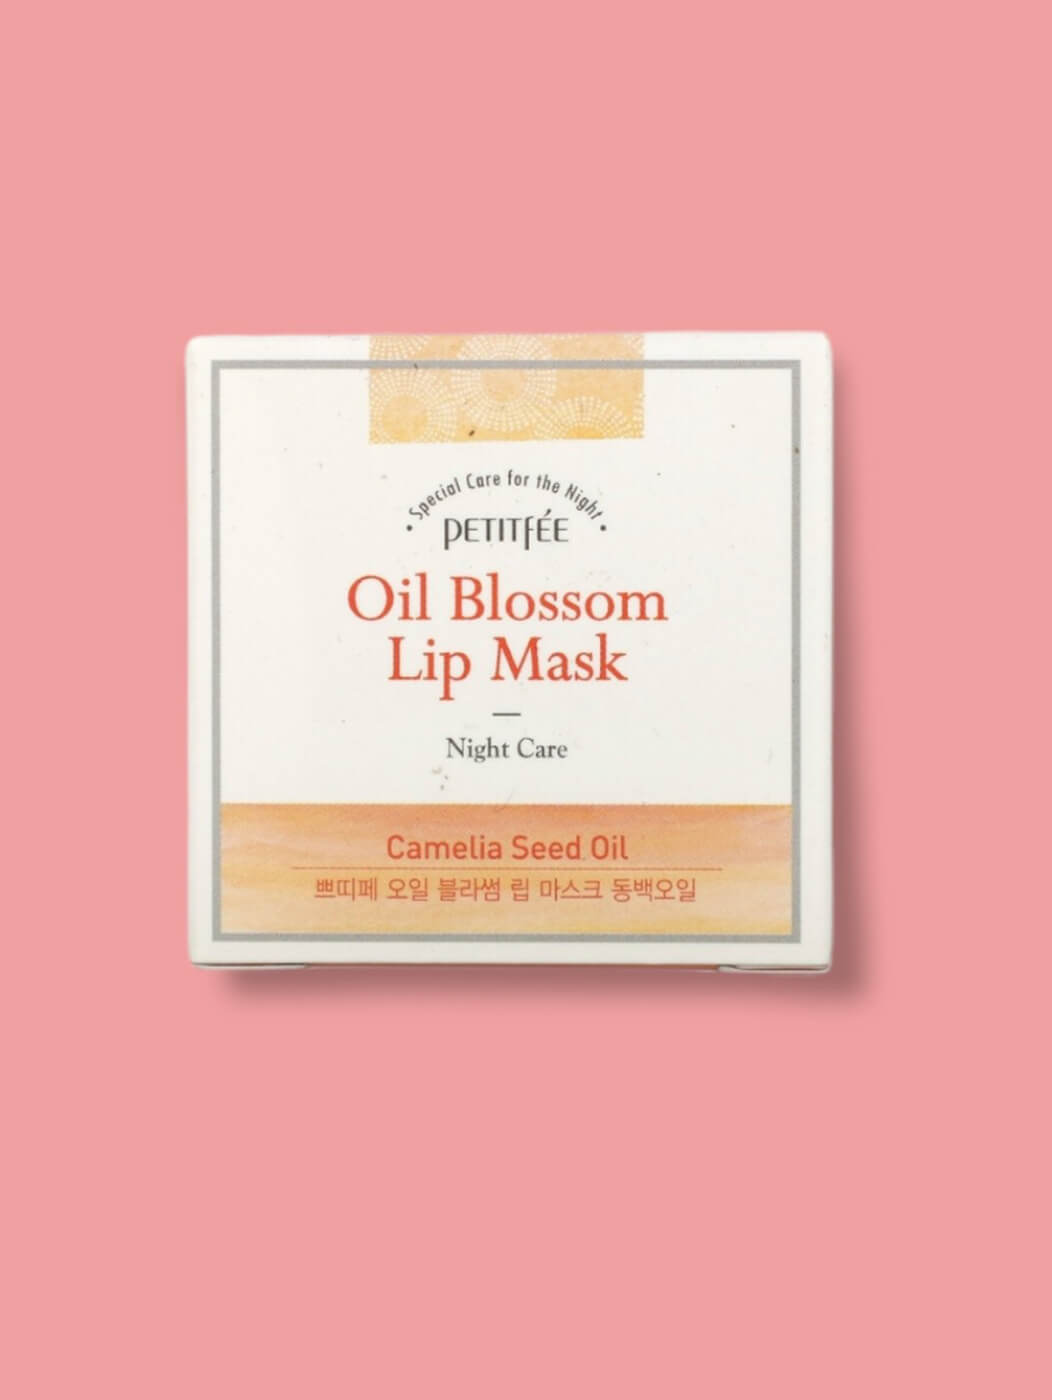 Petitfee, Oil Blossom Lip Mask, Camelia Seed Oil, 15g